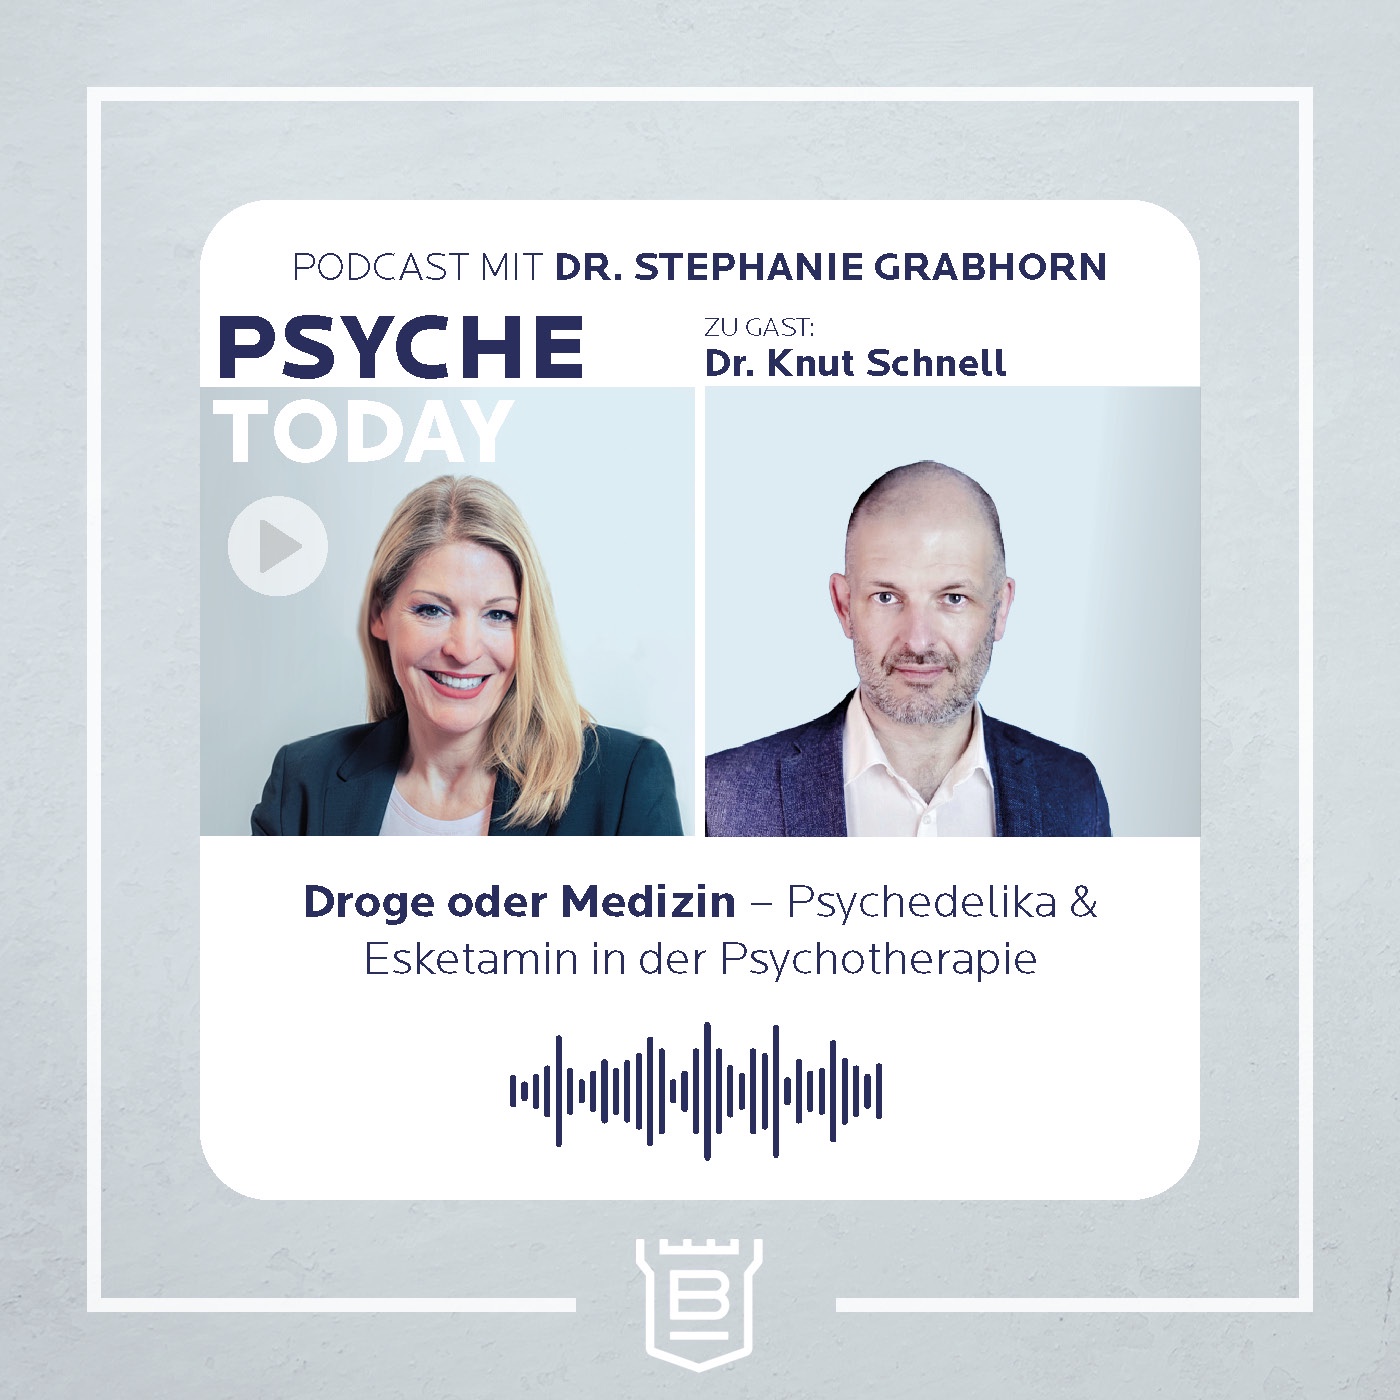 Droge oder Medizin – Psychedelika & Esketamin in der Psychotherapie